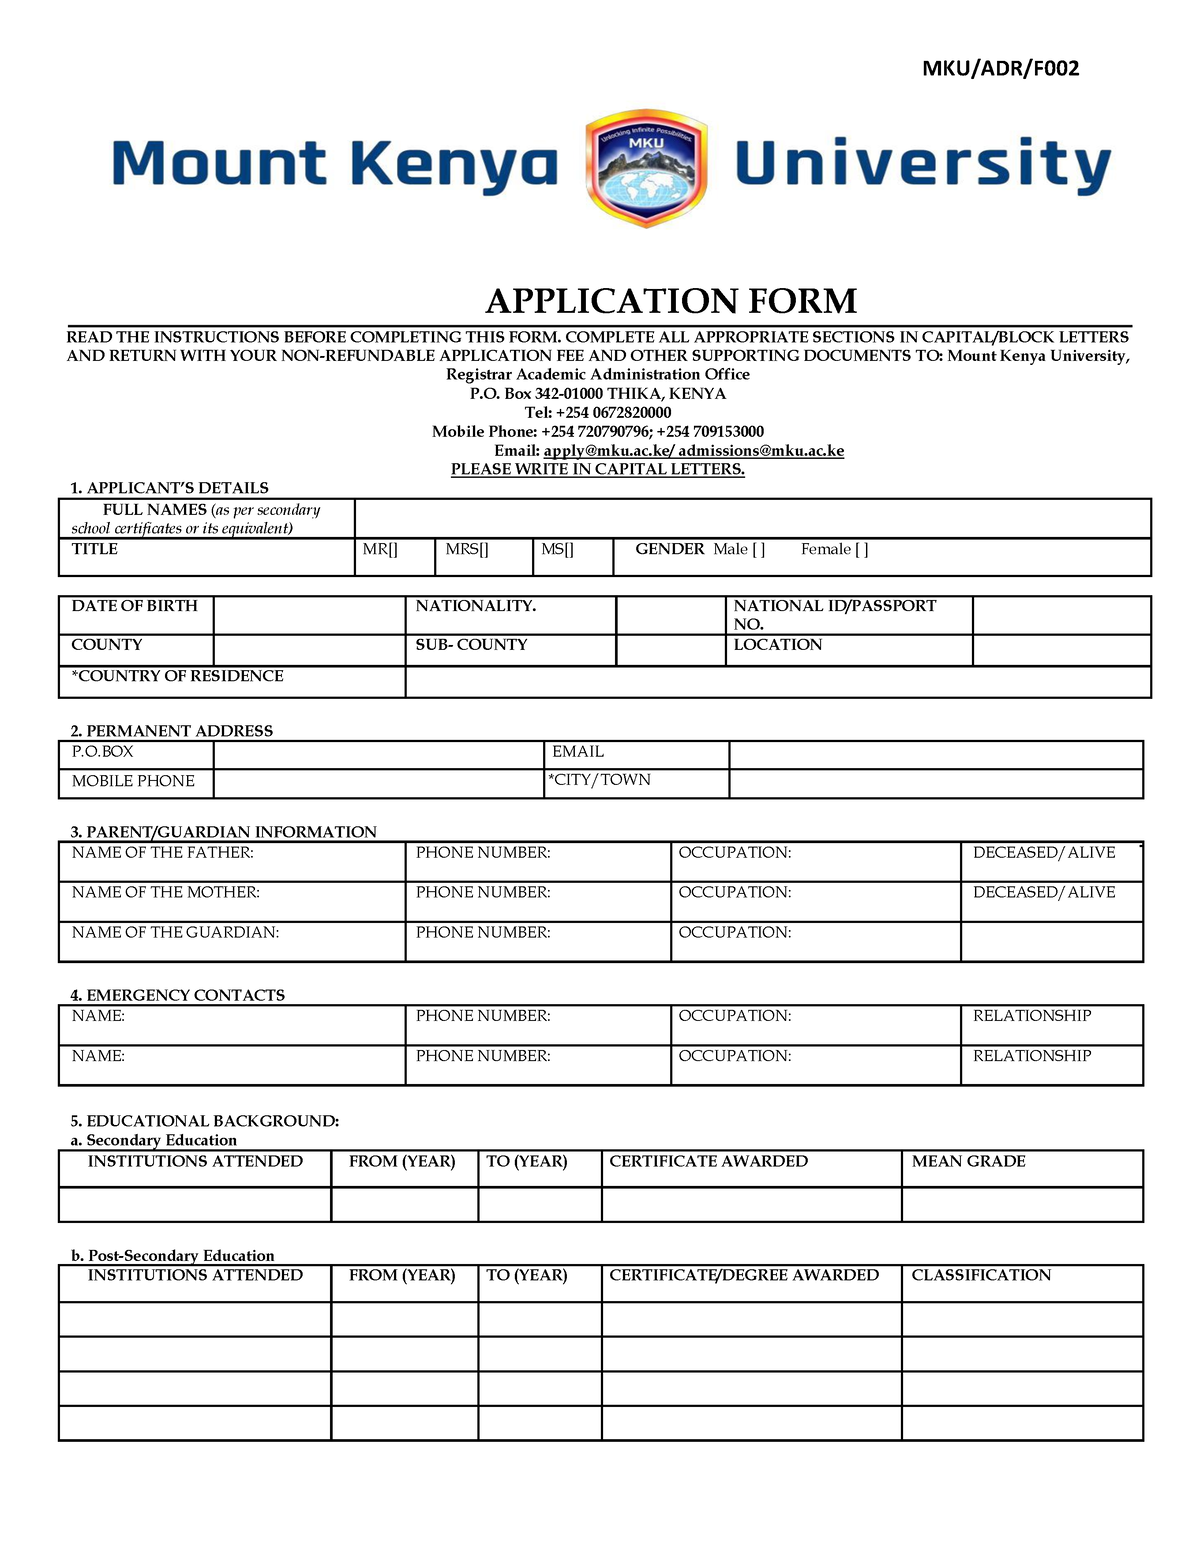 application letter for mount kenya university